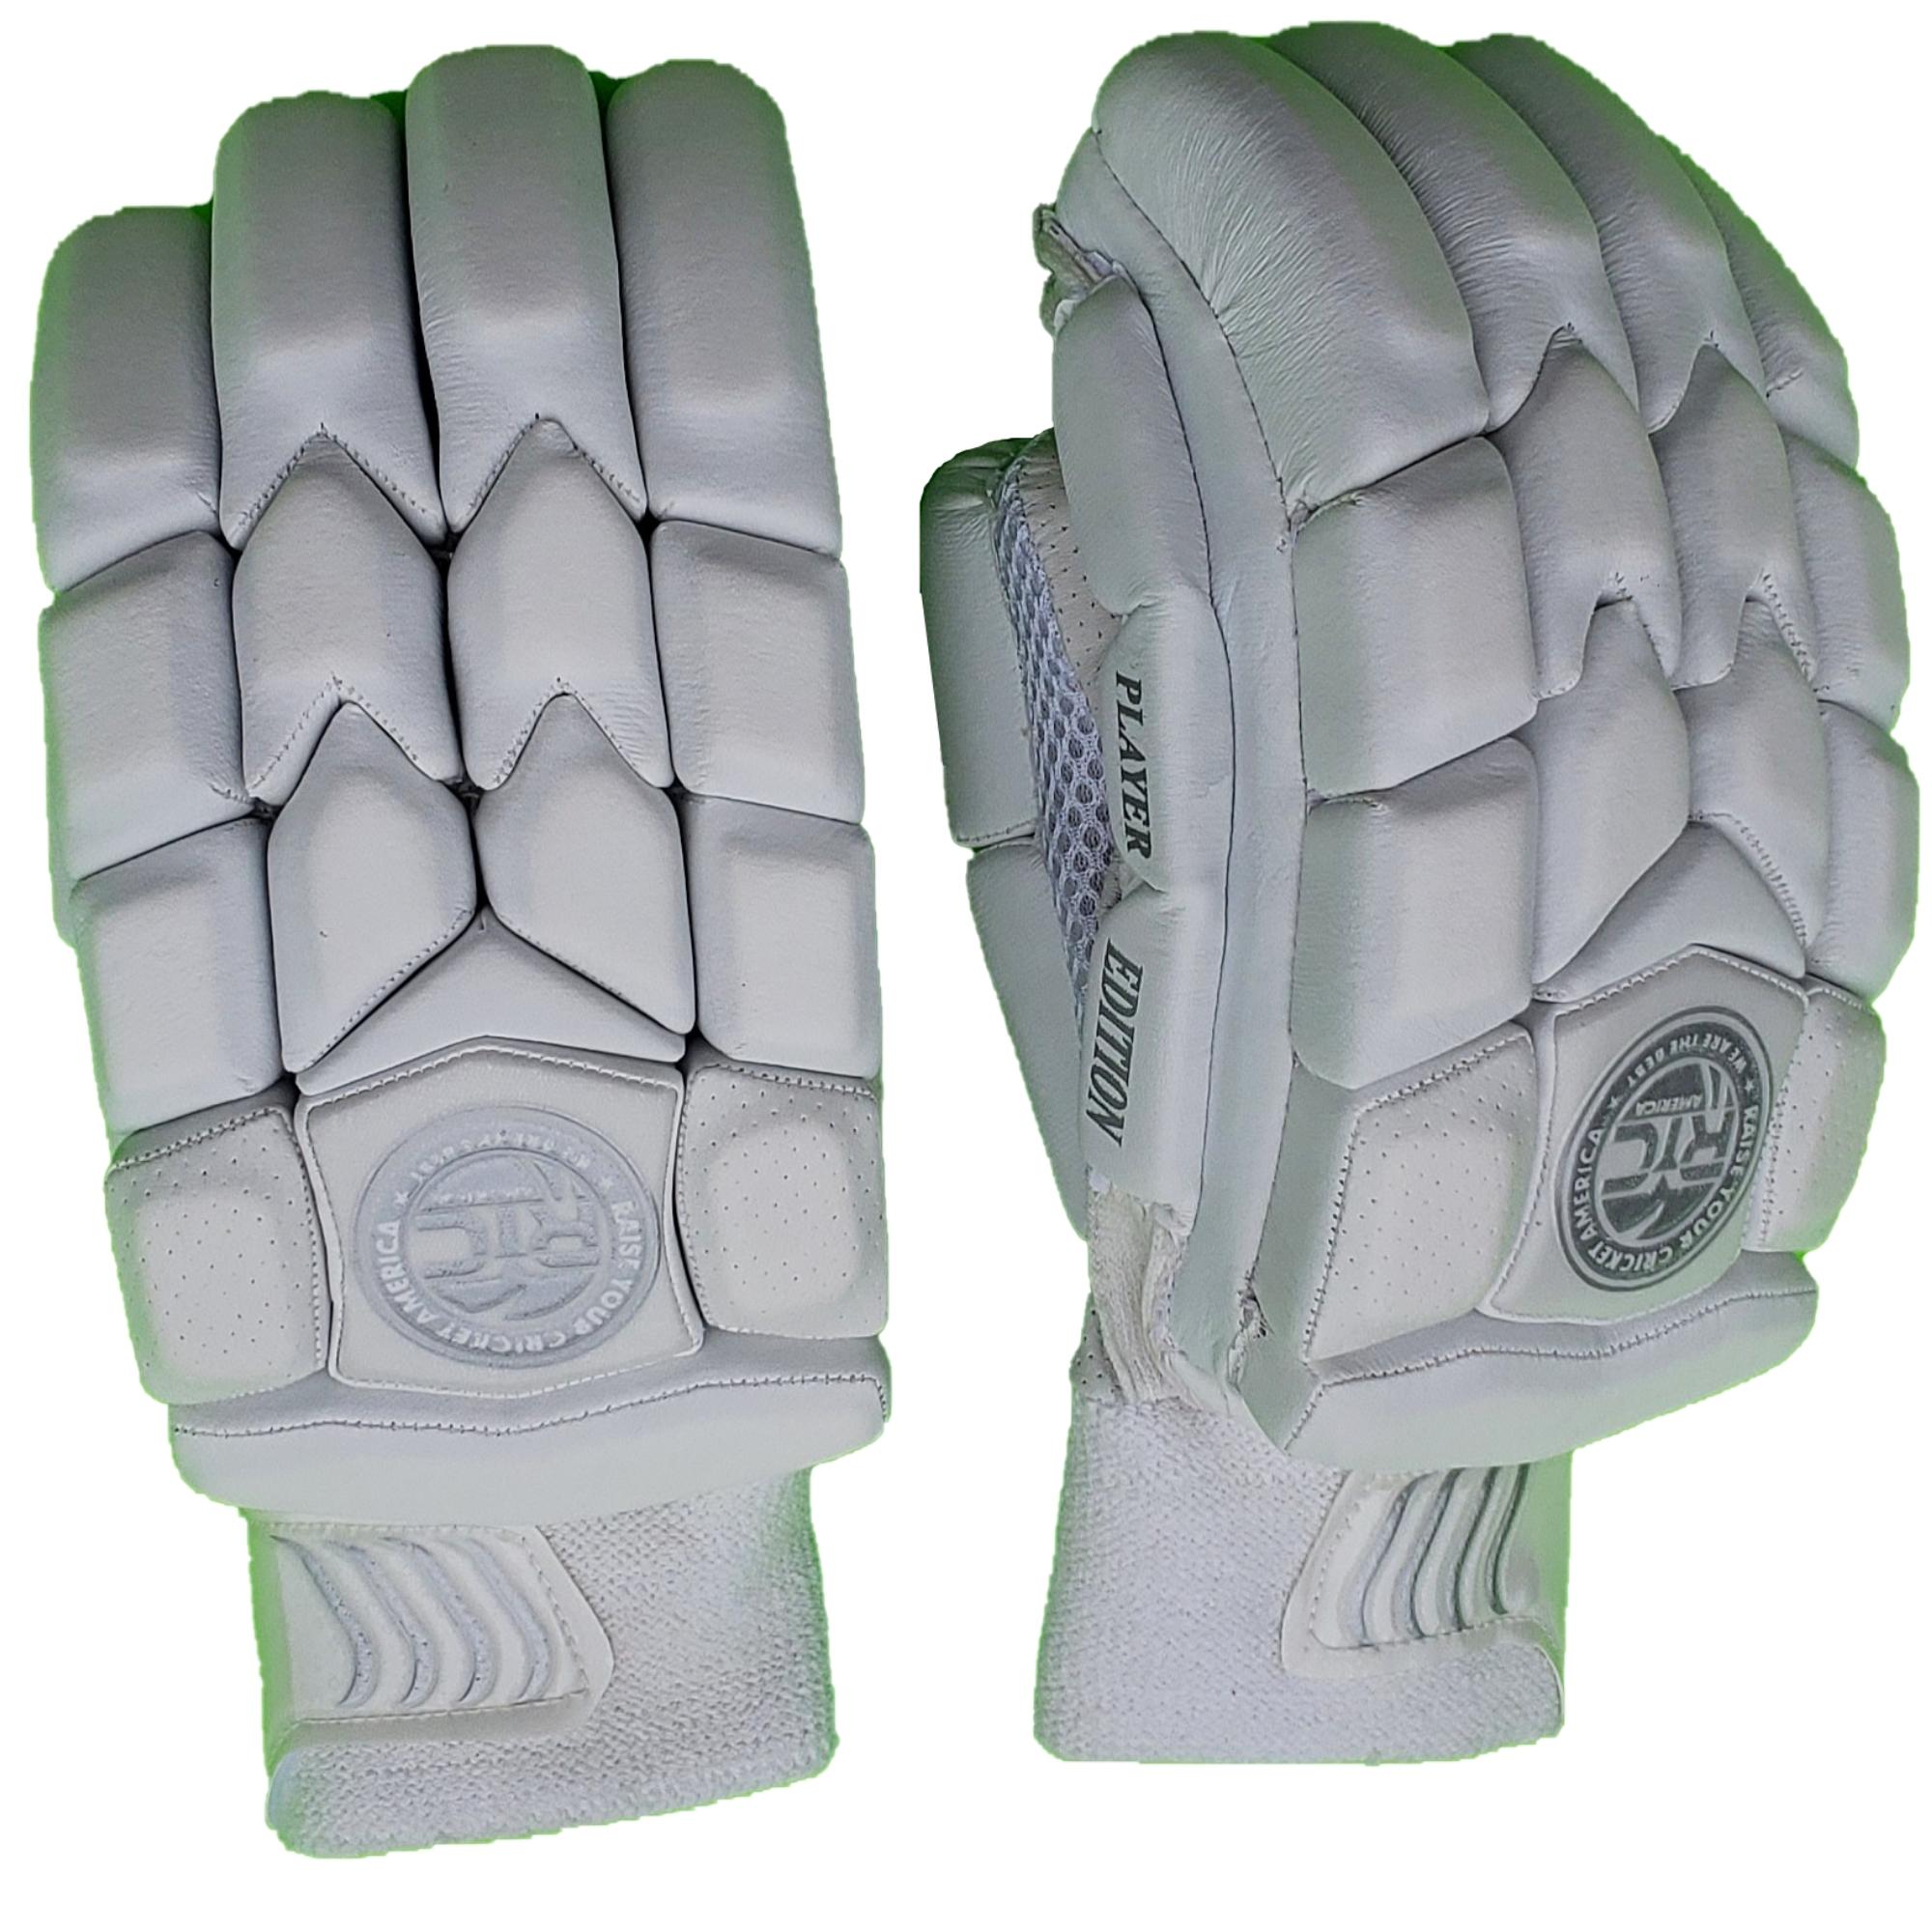 Zee Sports RYC Player Edition White Batting Gloves